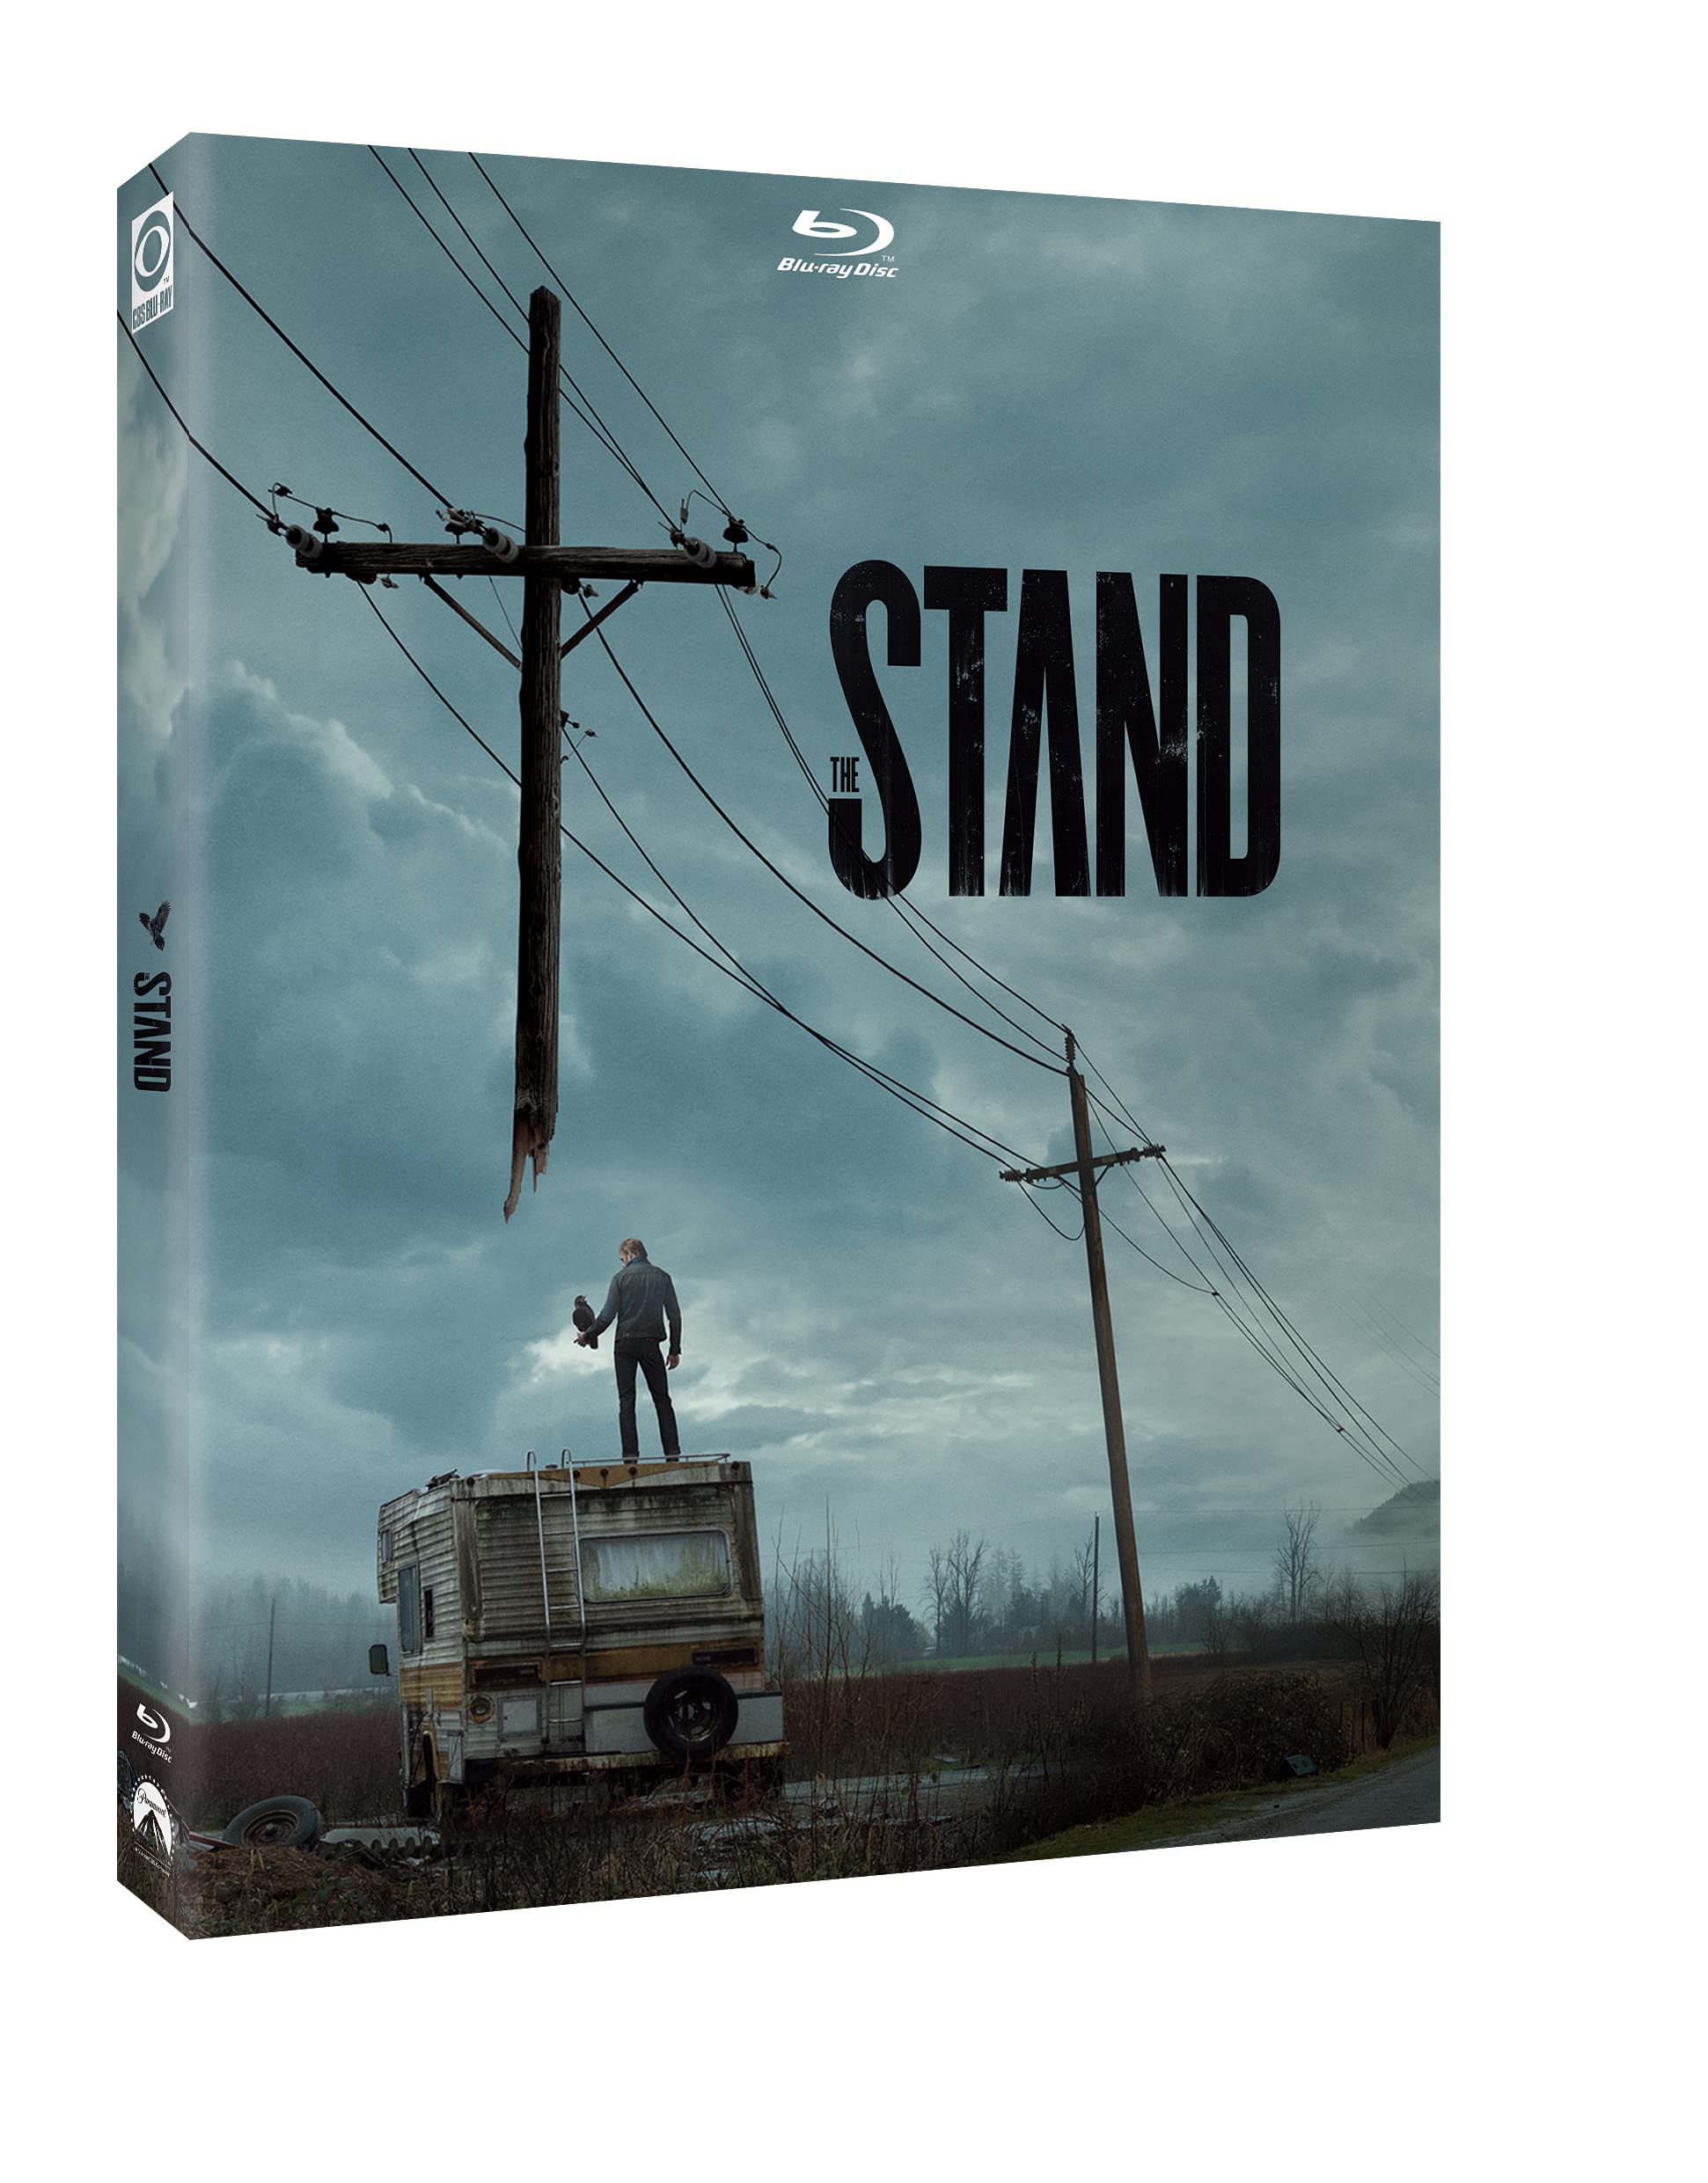 grand choix Le Fléau (The Stand) [Blu-ray] z2EEW91J6 bien vendre